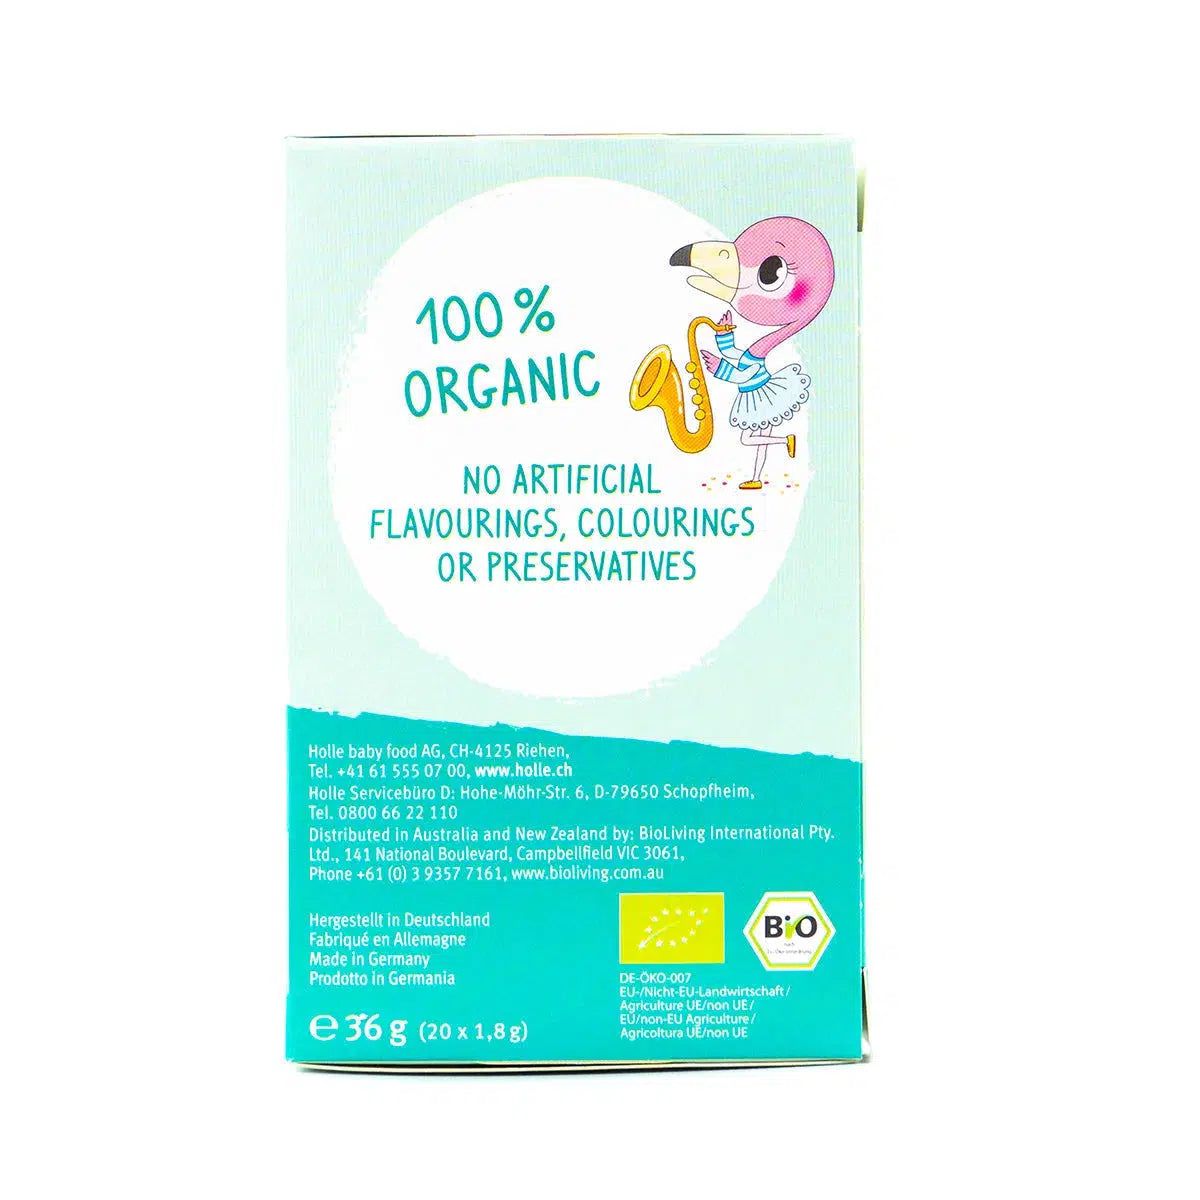 Holle Organic Fruity Flamingo Tea (20 tea bags) - from 3rd year